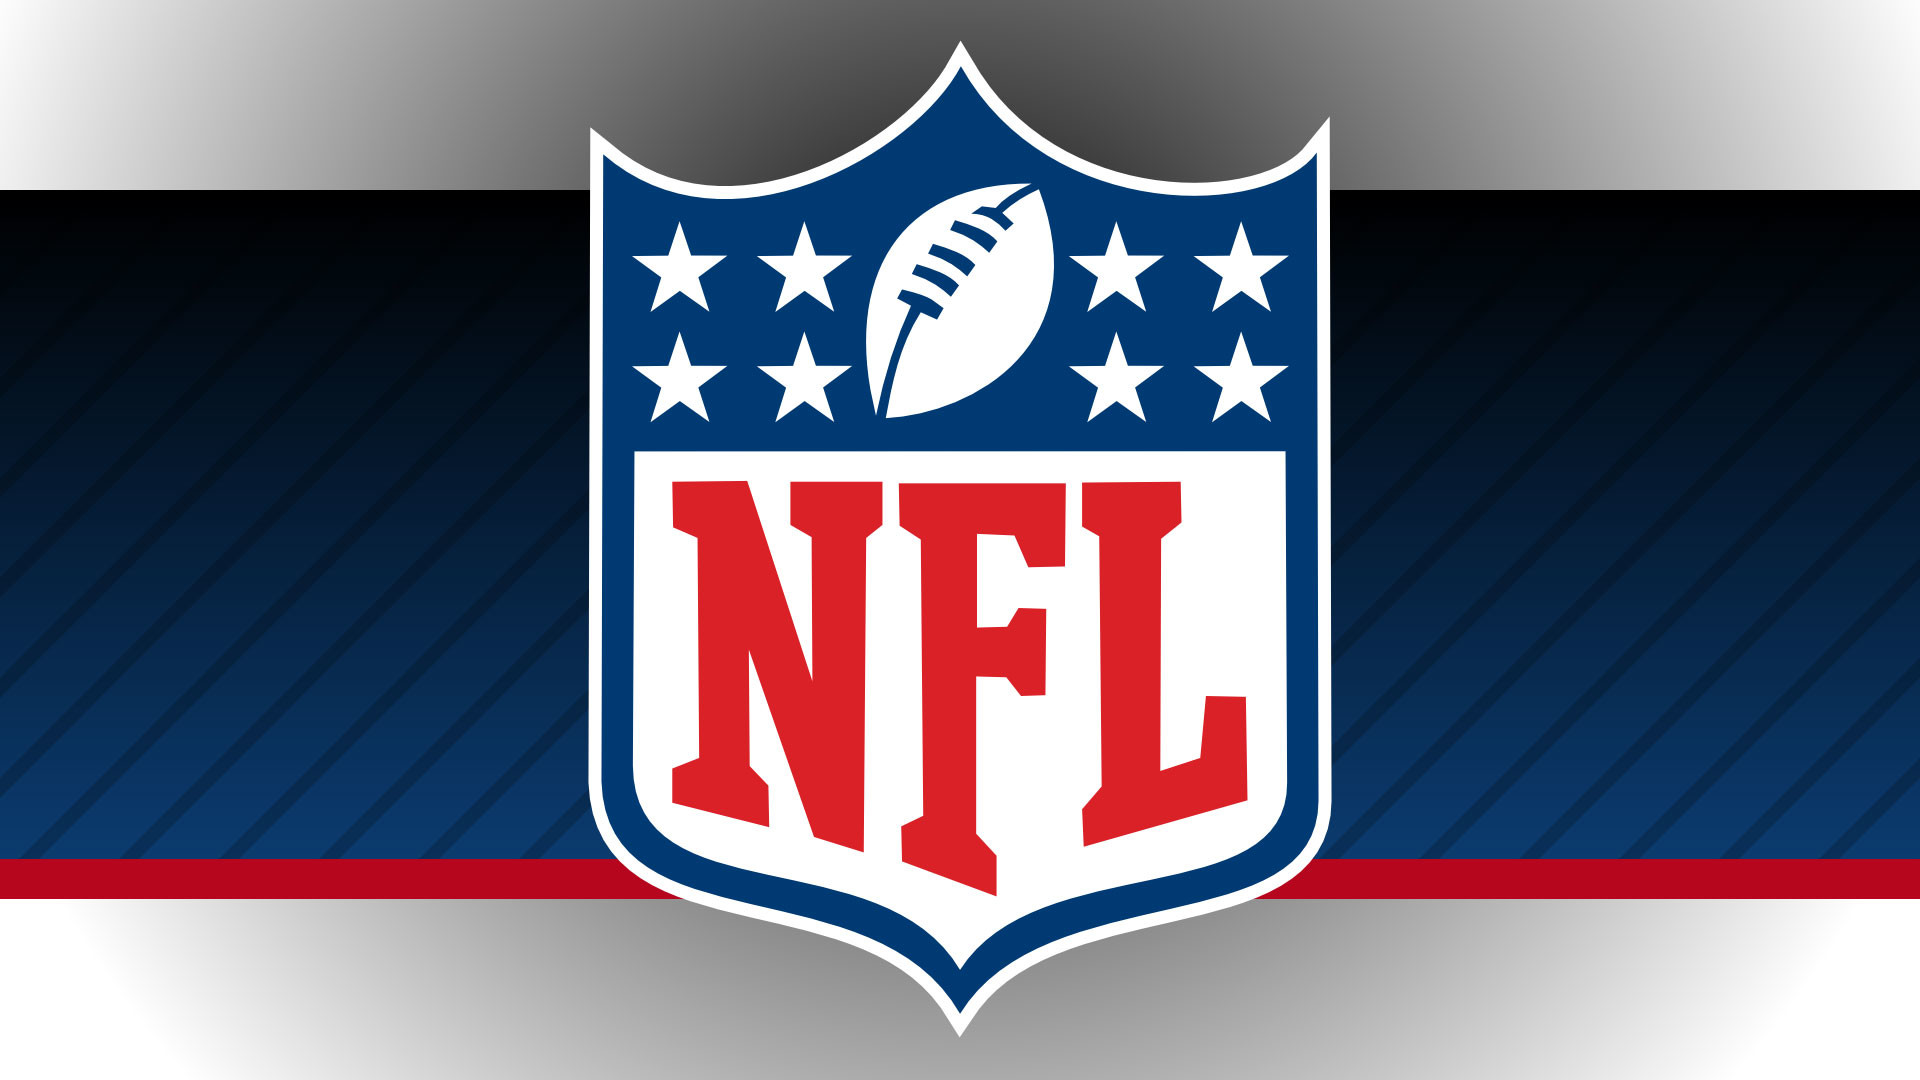 1920x1080 NFL logo wallpaper HD free download.